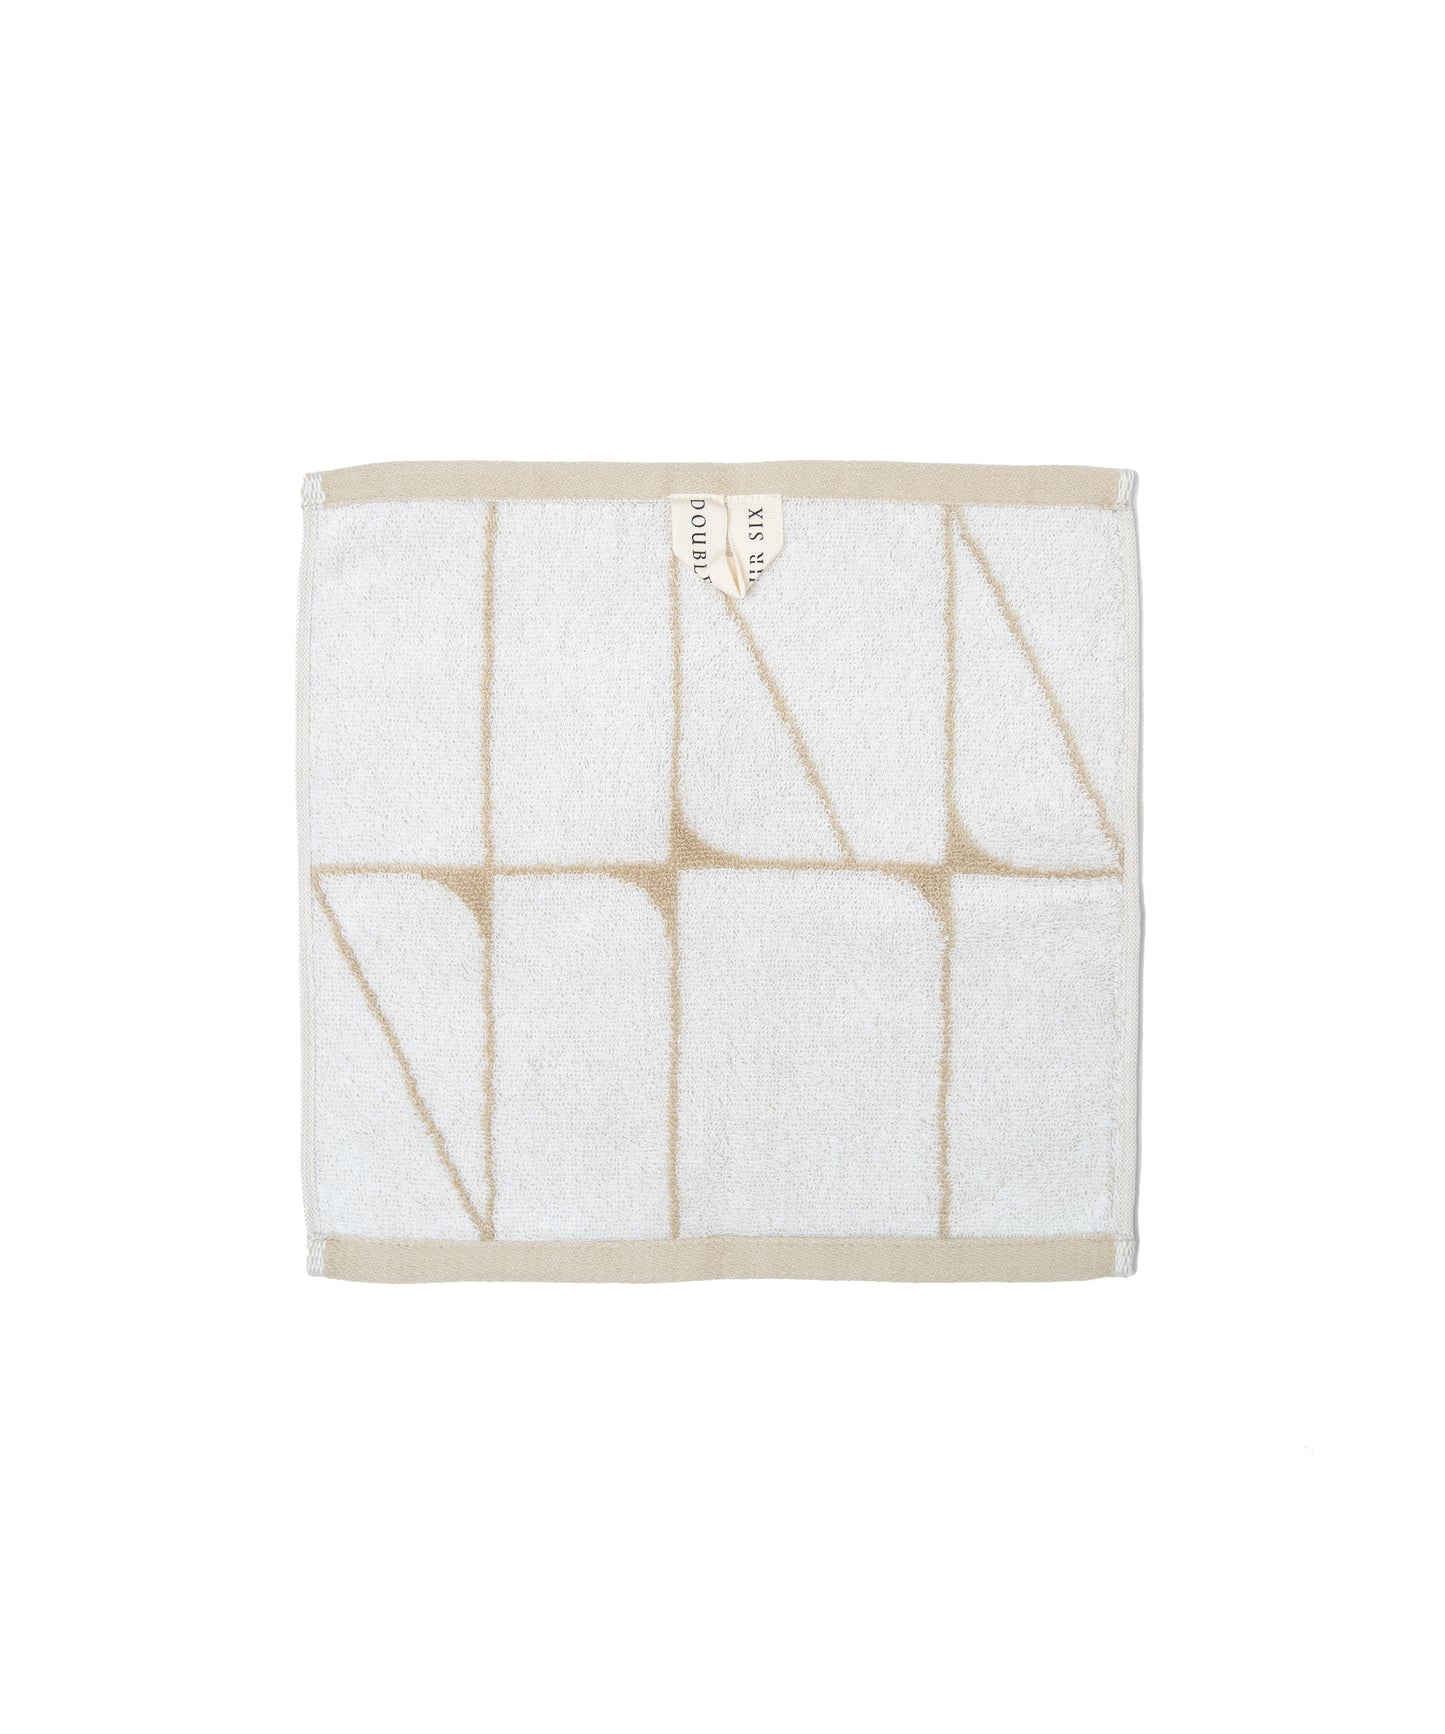 446 hand towel total pattern